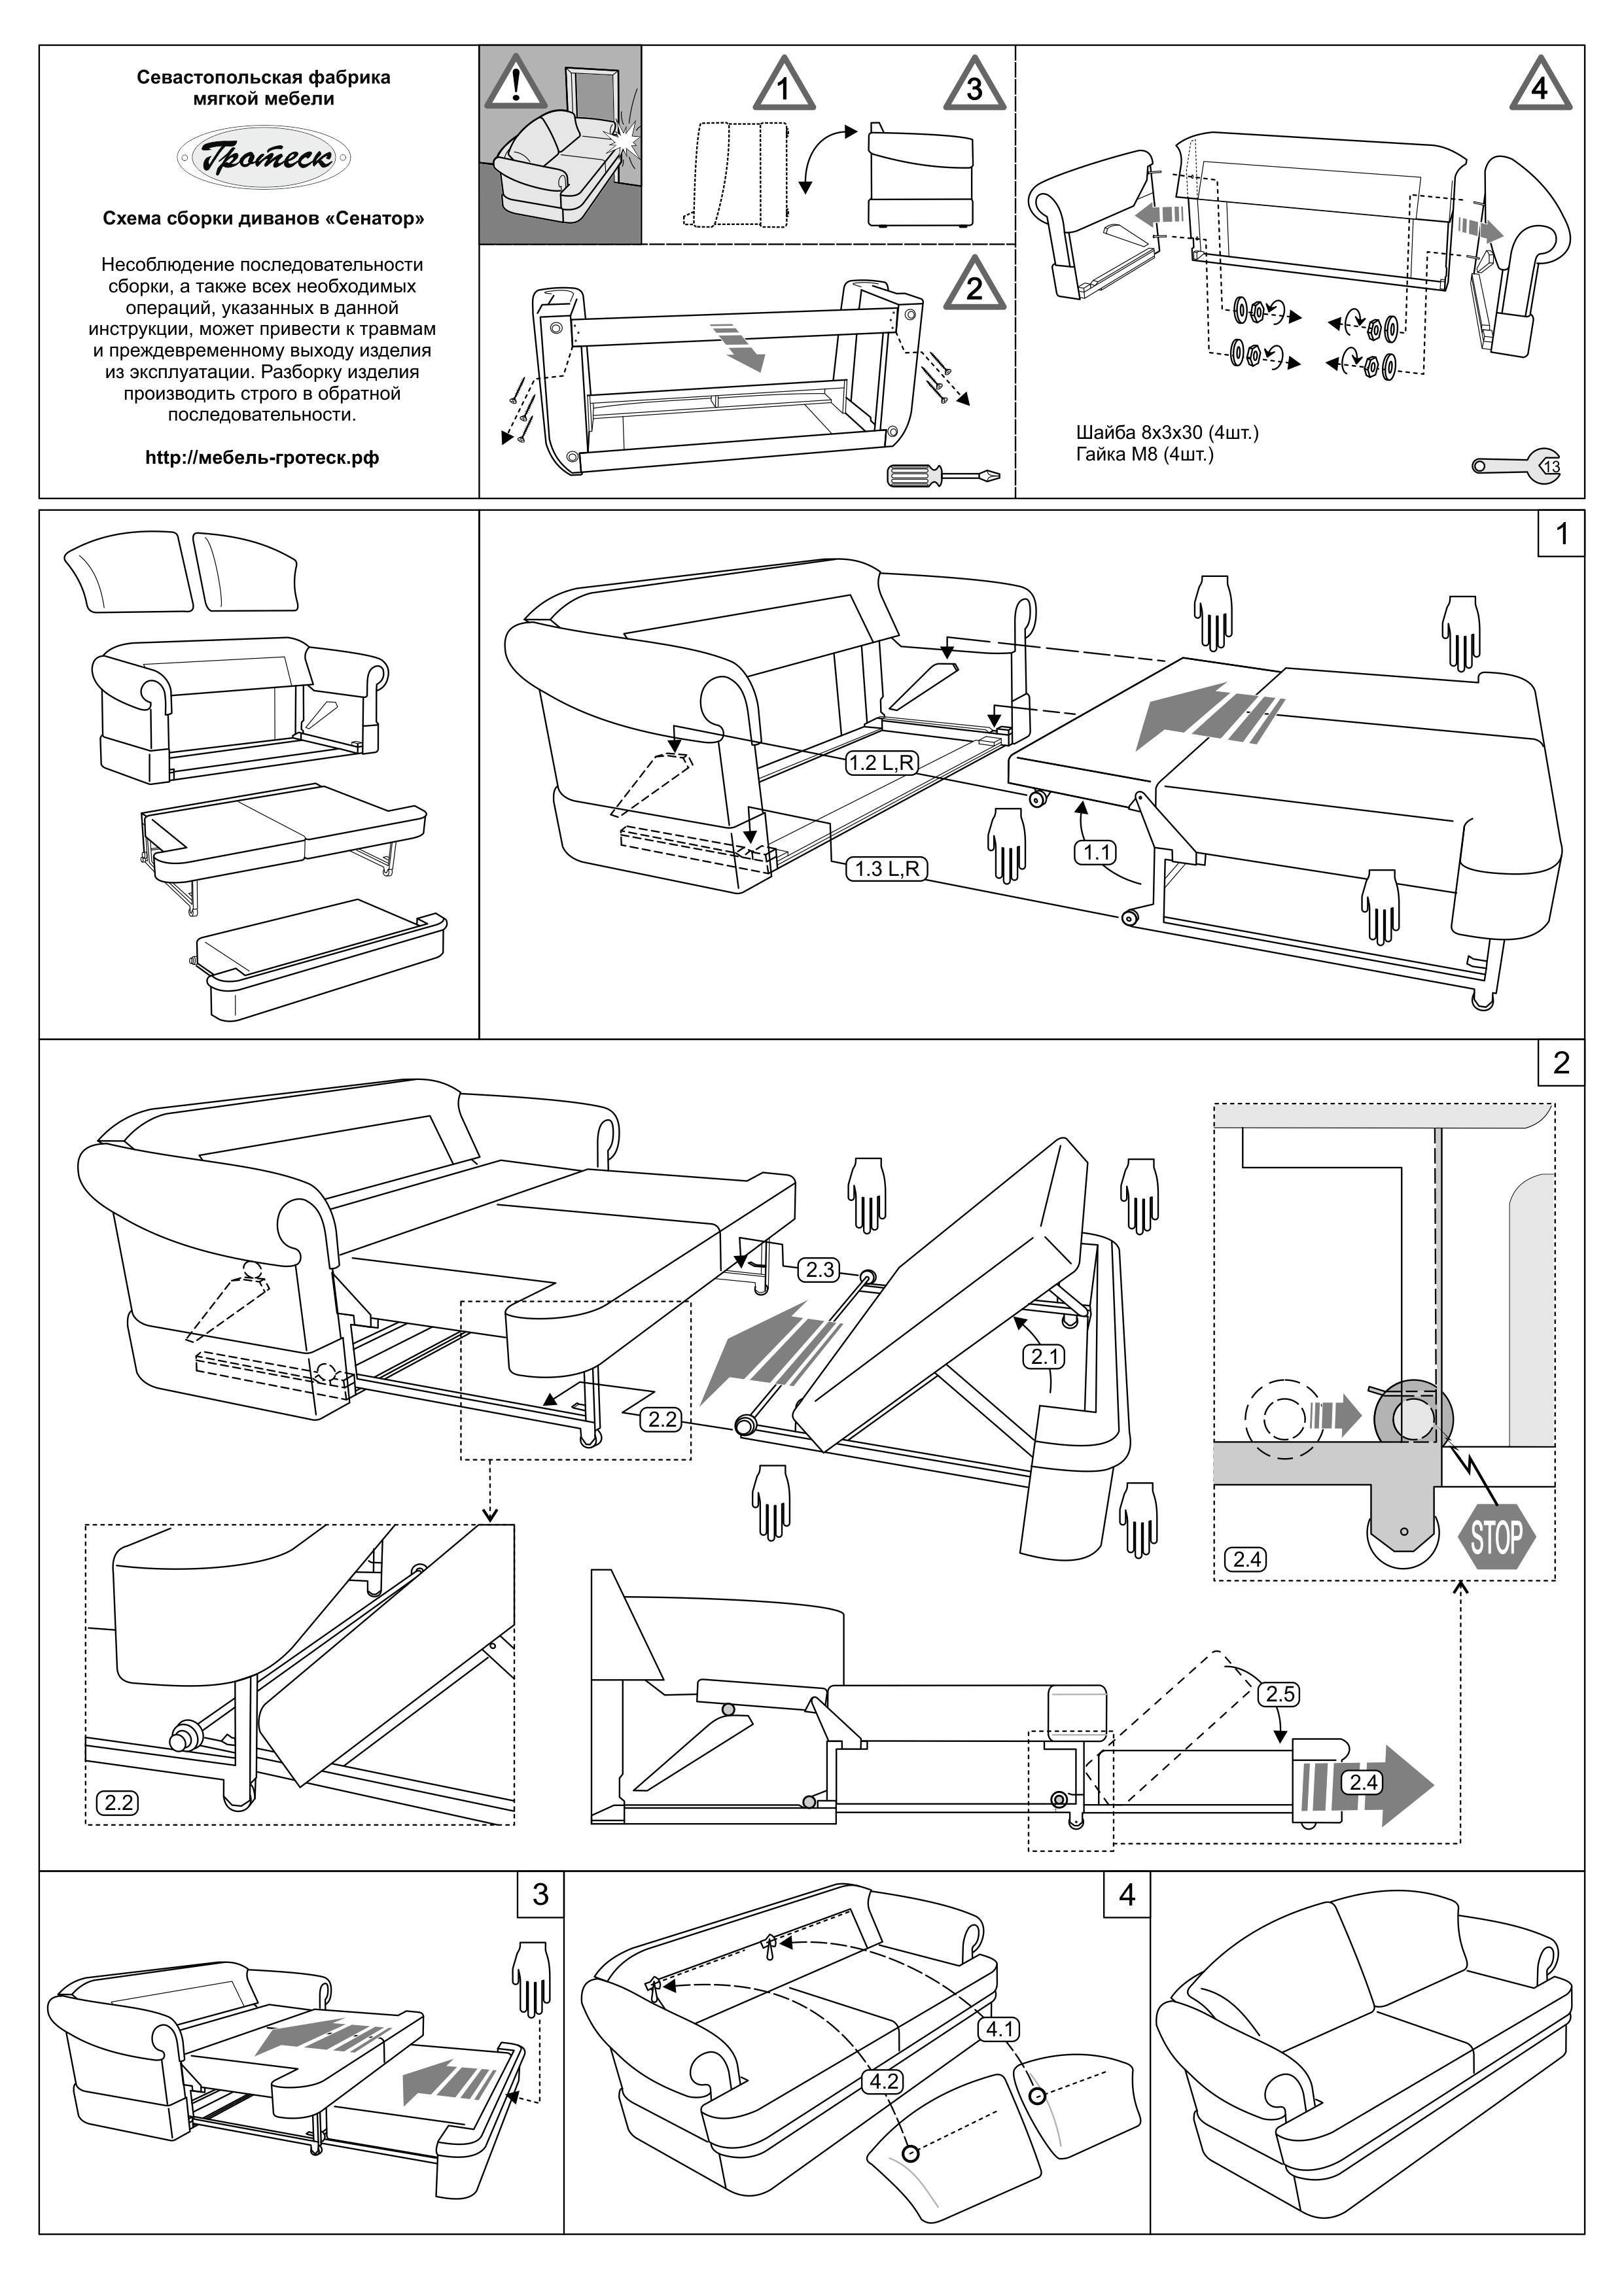 Схема разборки углового дивана Монреаль фабрики 8 марта